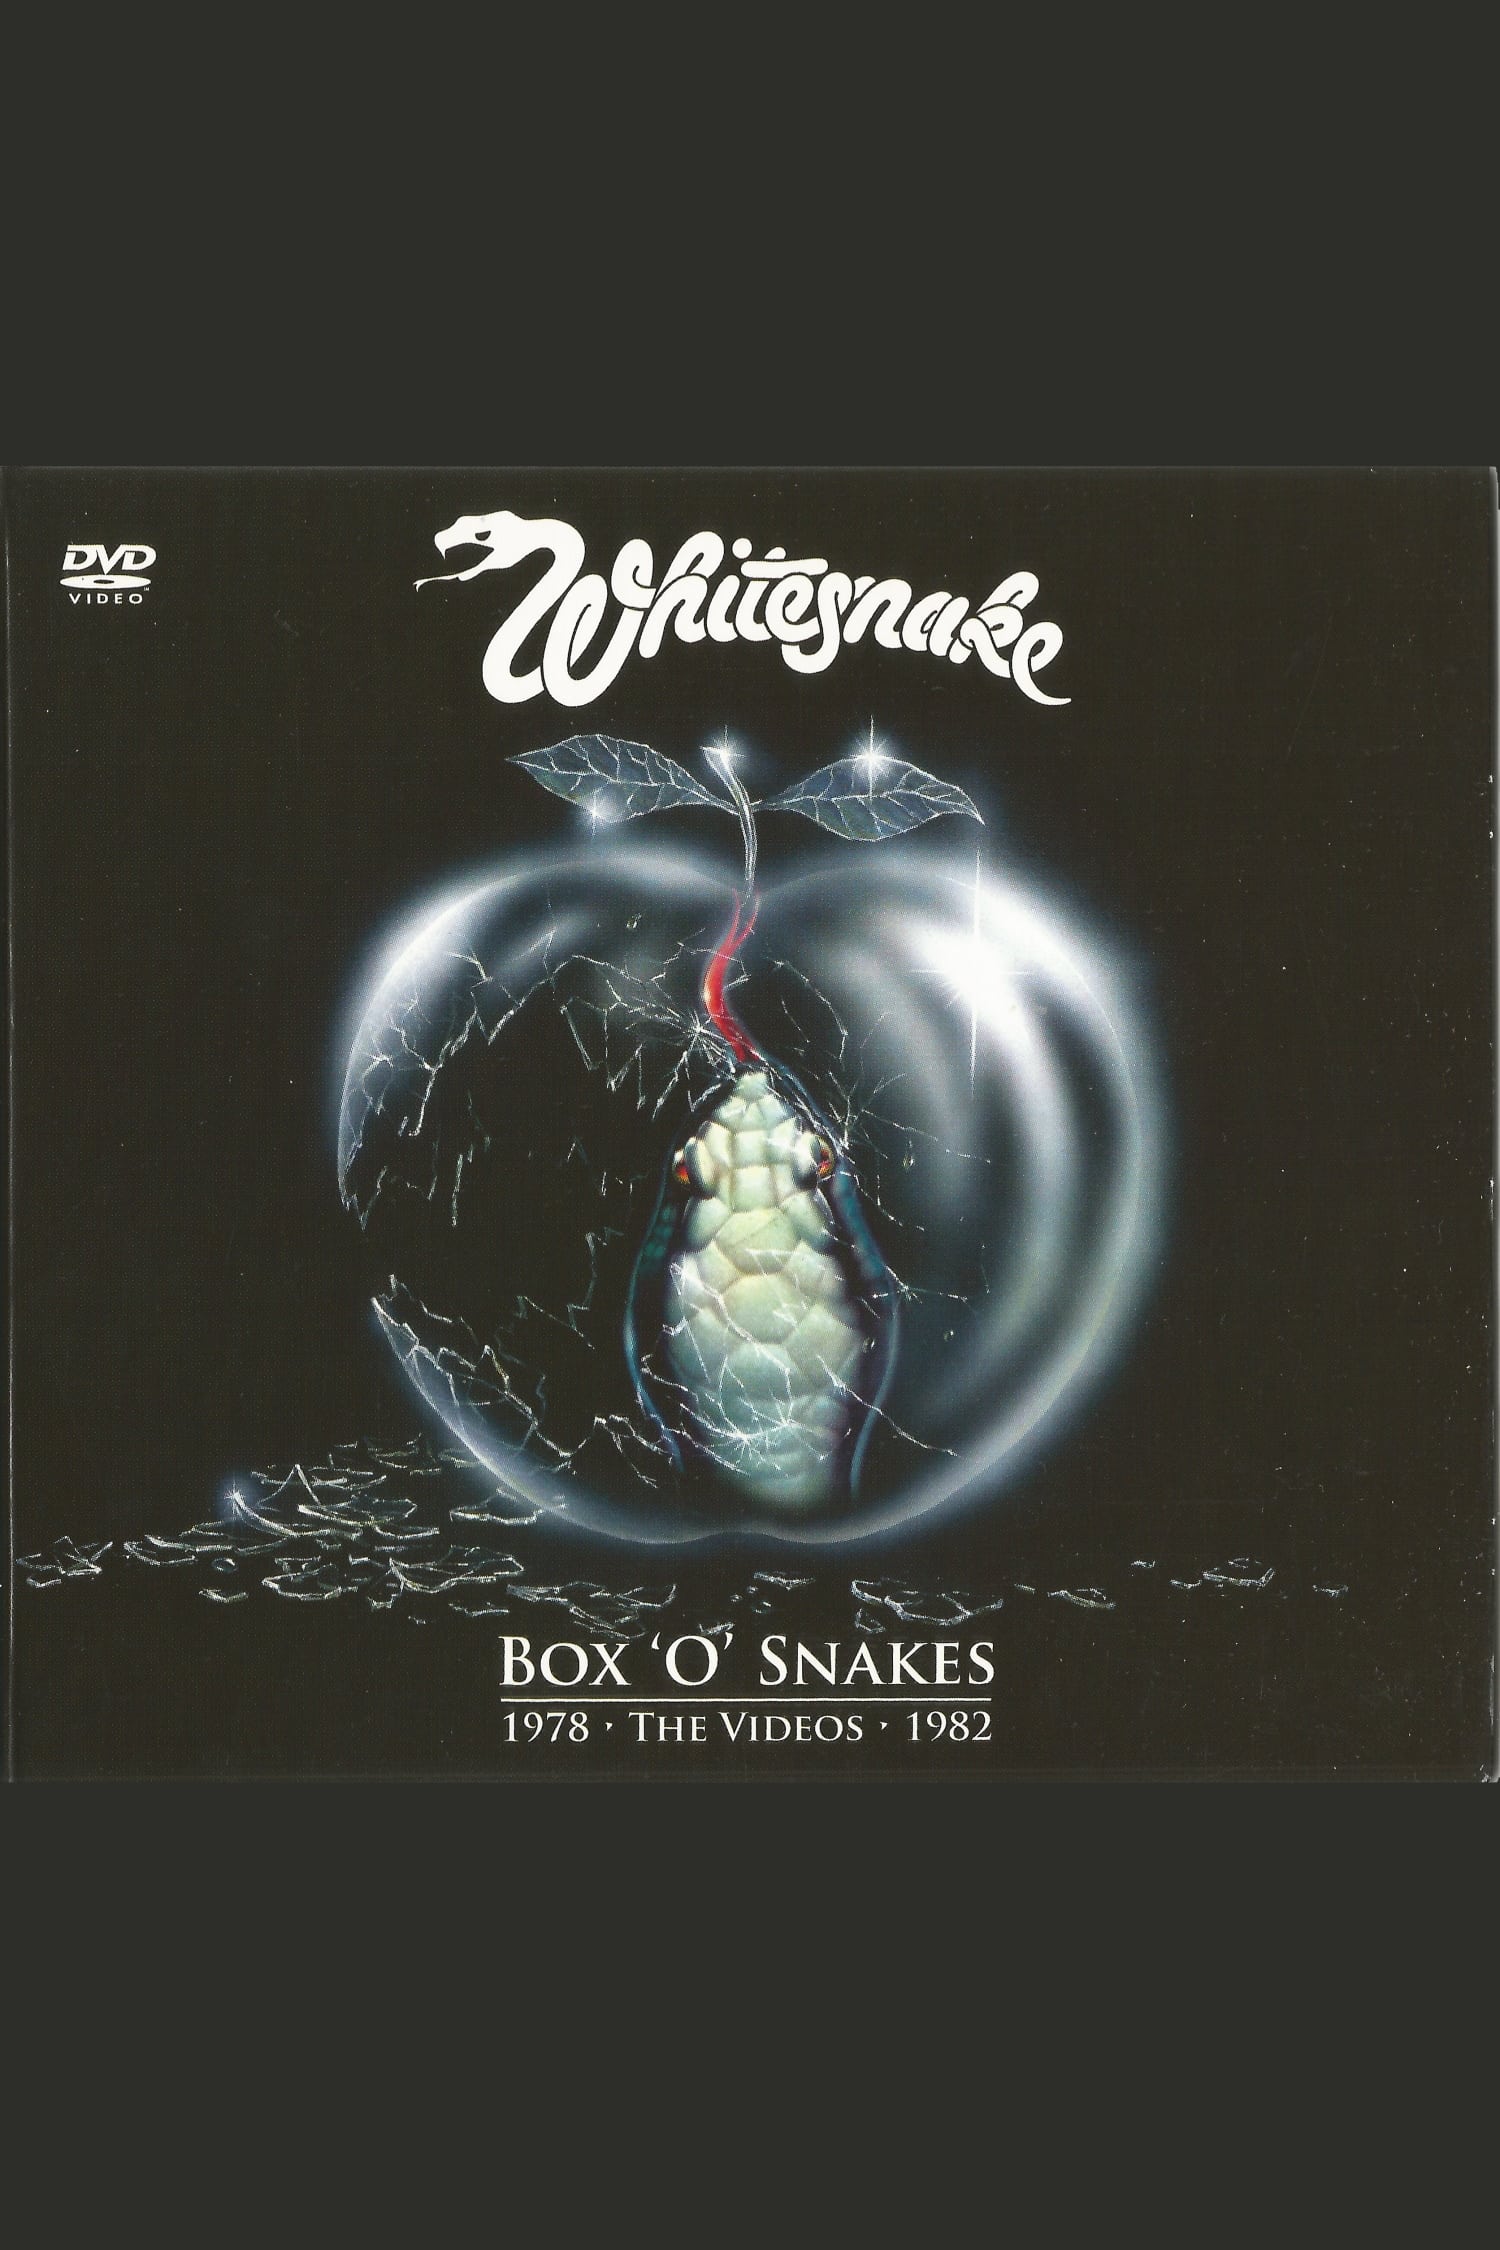 Whitesnake: Box 'O' Snakes